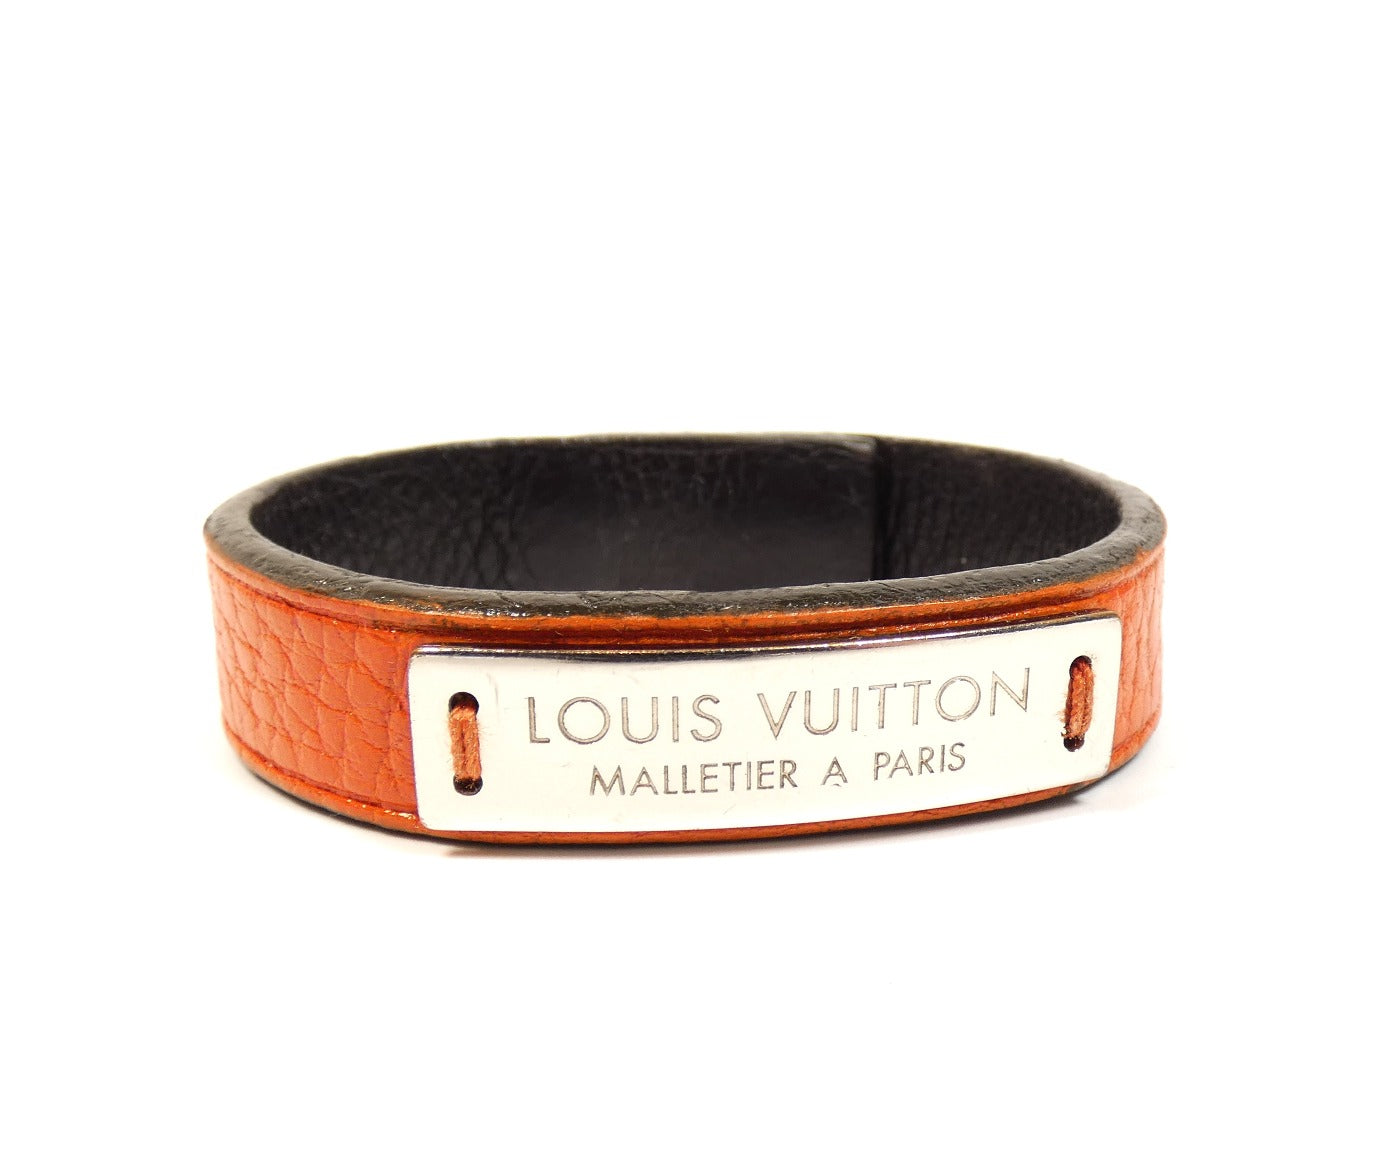 LOUIS VUITTON logo on black surface. Louis Vuitton Malletier